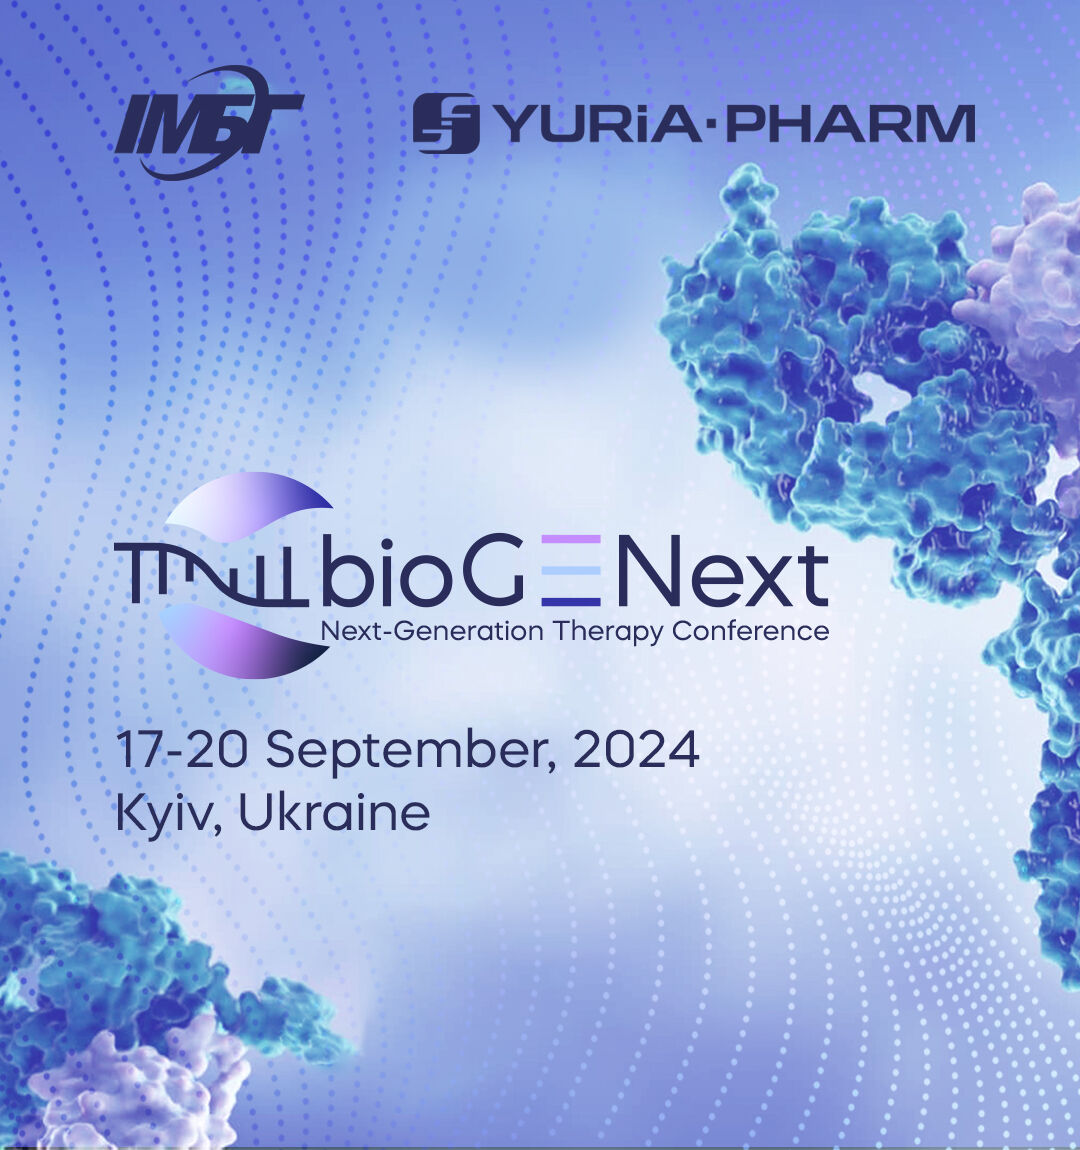 BioGENext-2024: shaping the future of medicine through biomedical R&D